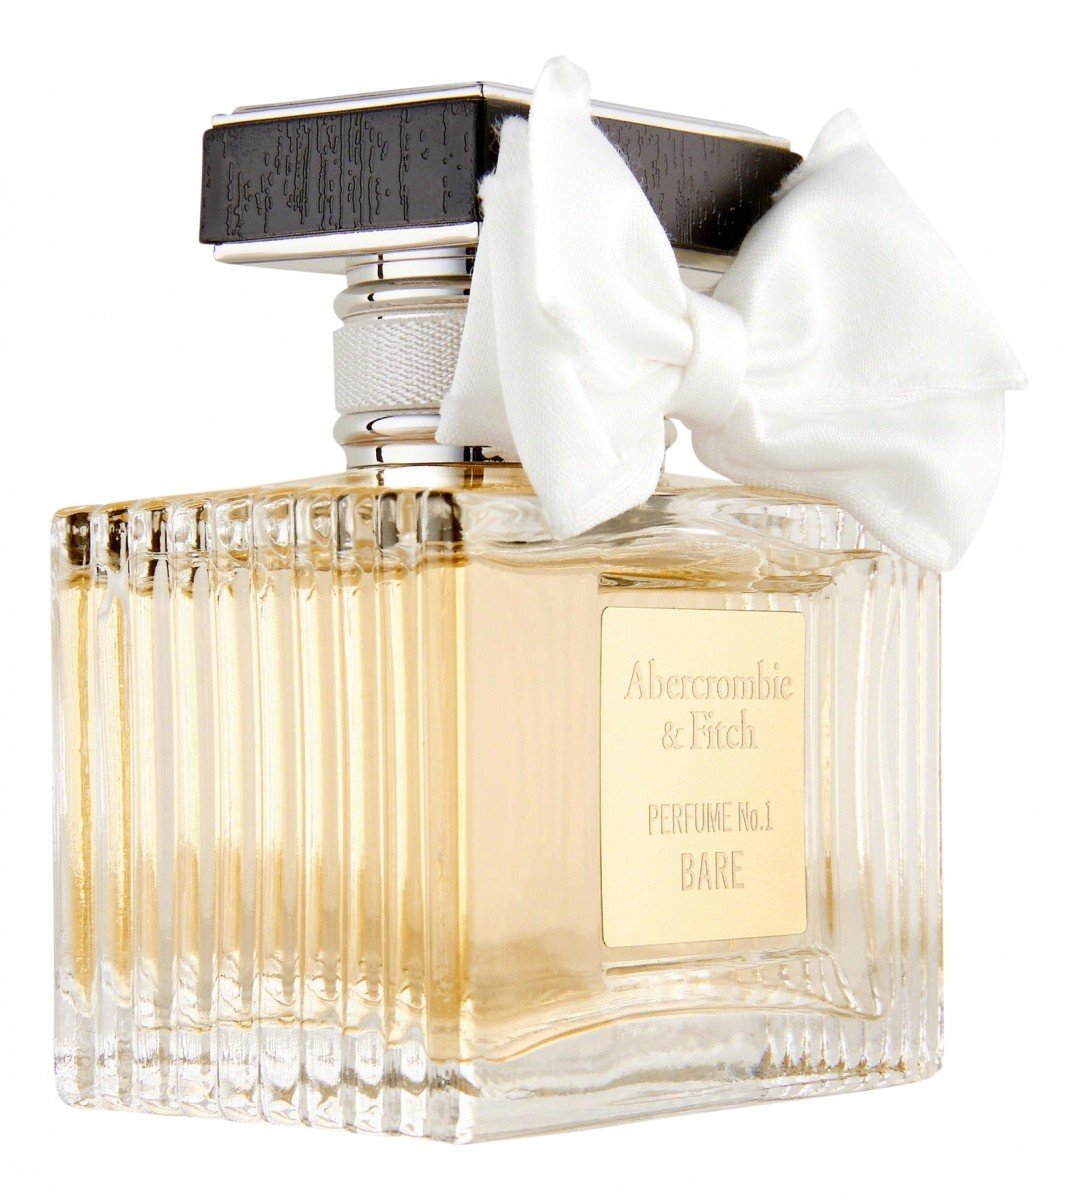 Abercrombie \u0026 Fitch - Perfume No. 1 